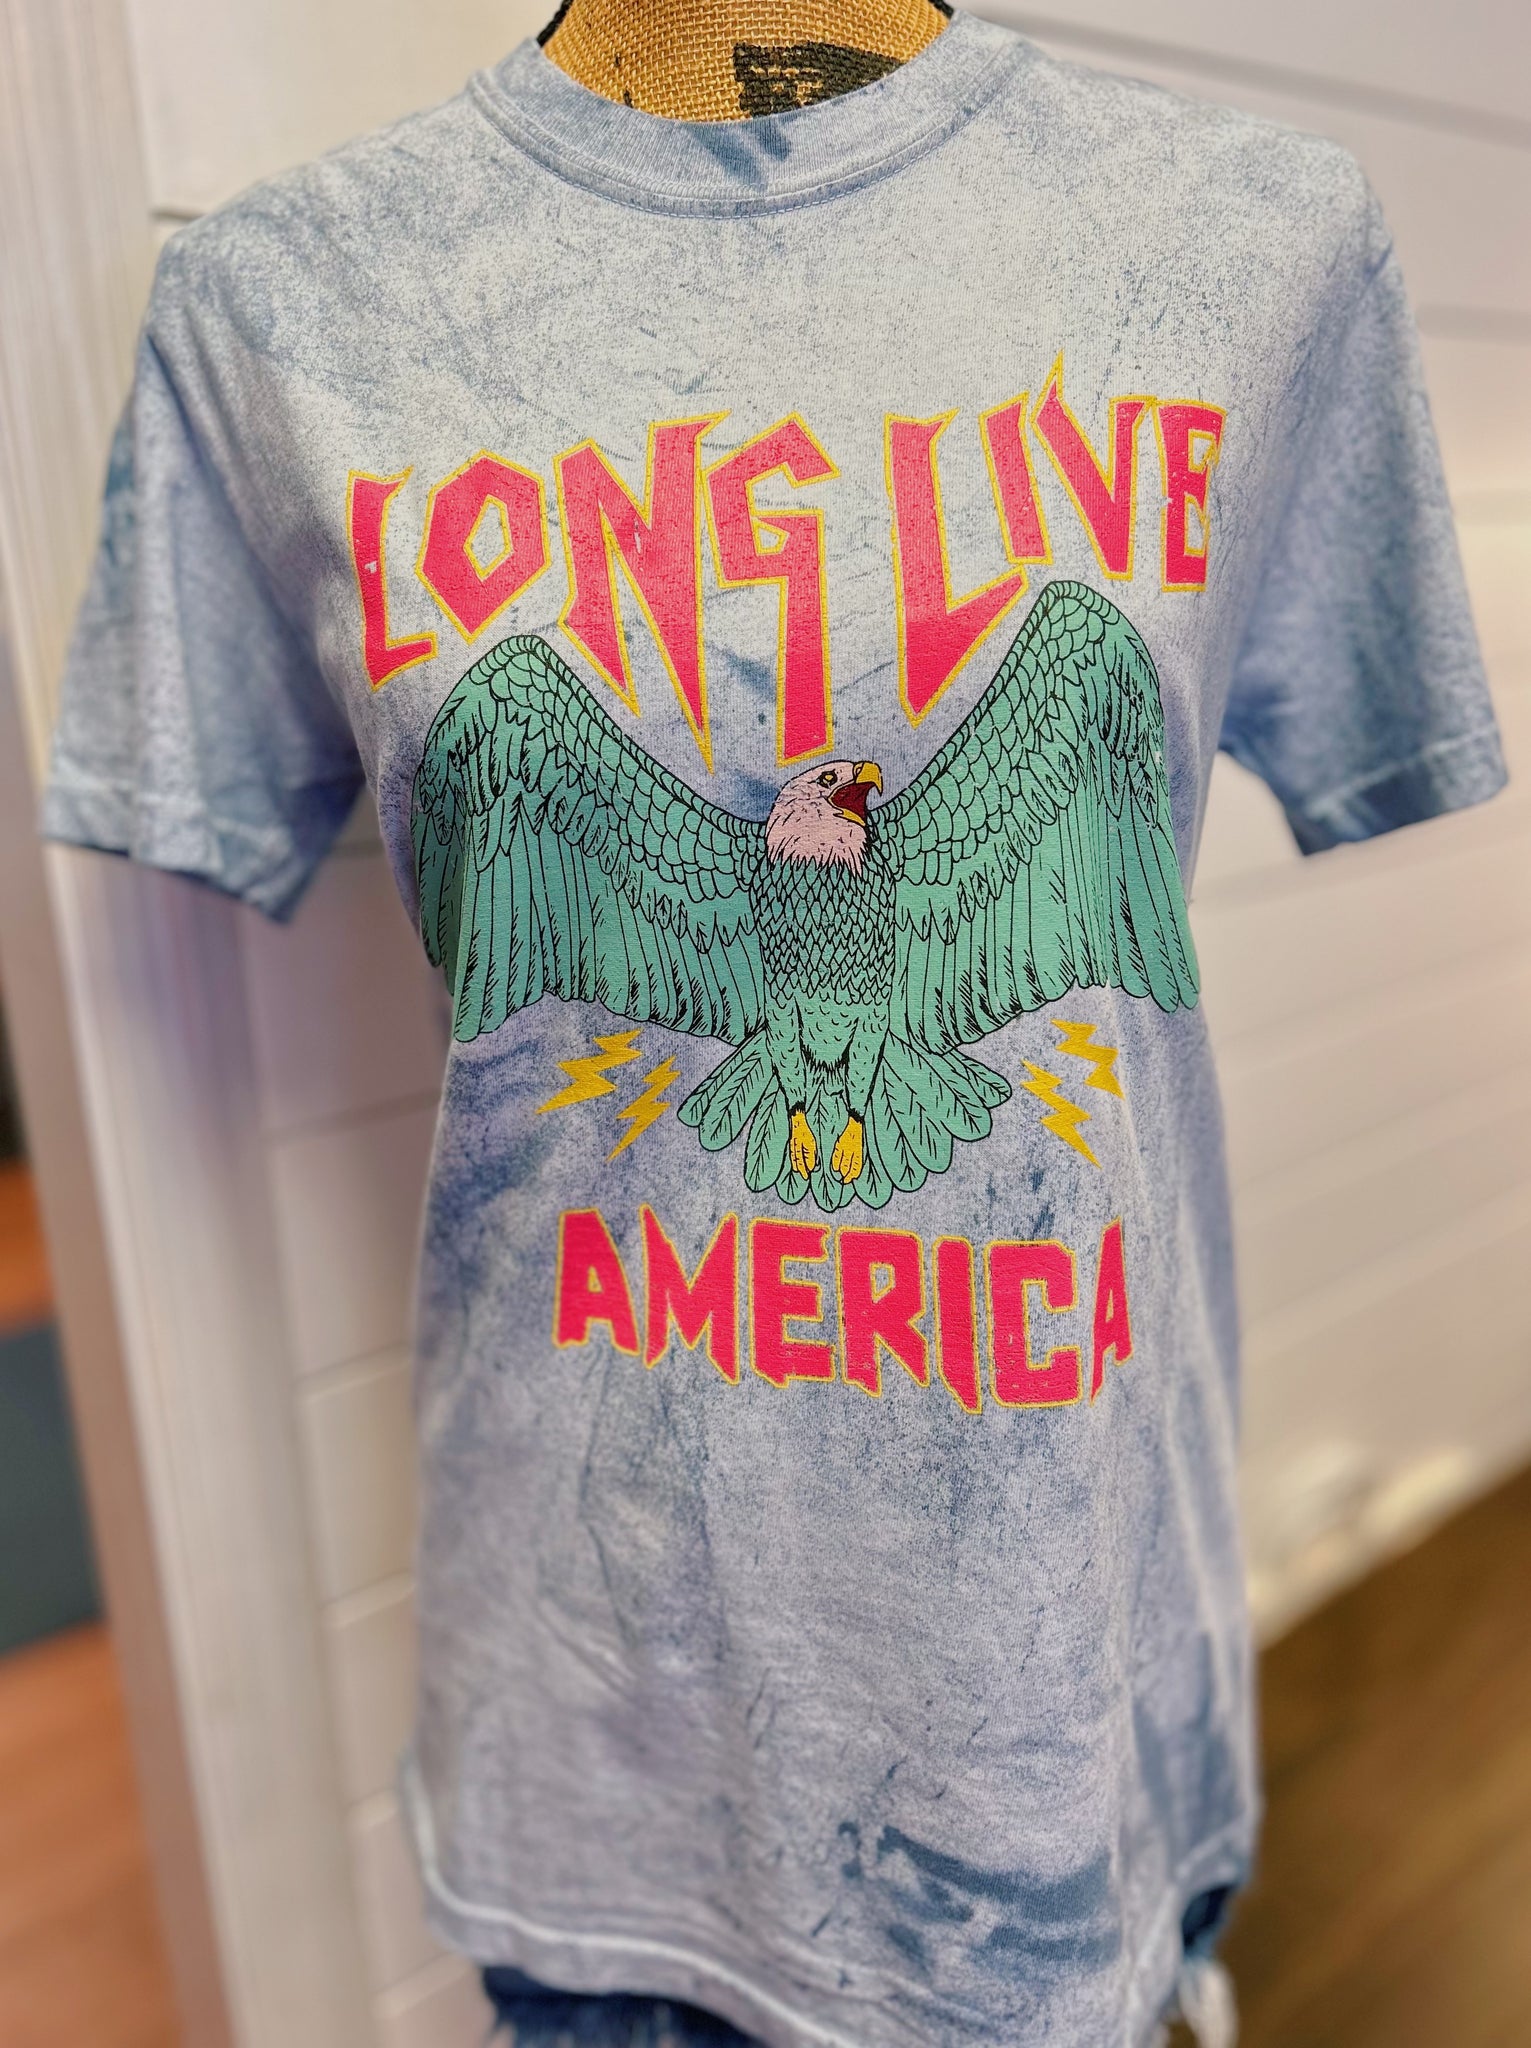 Long Live America Tee